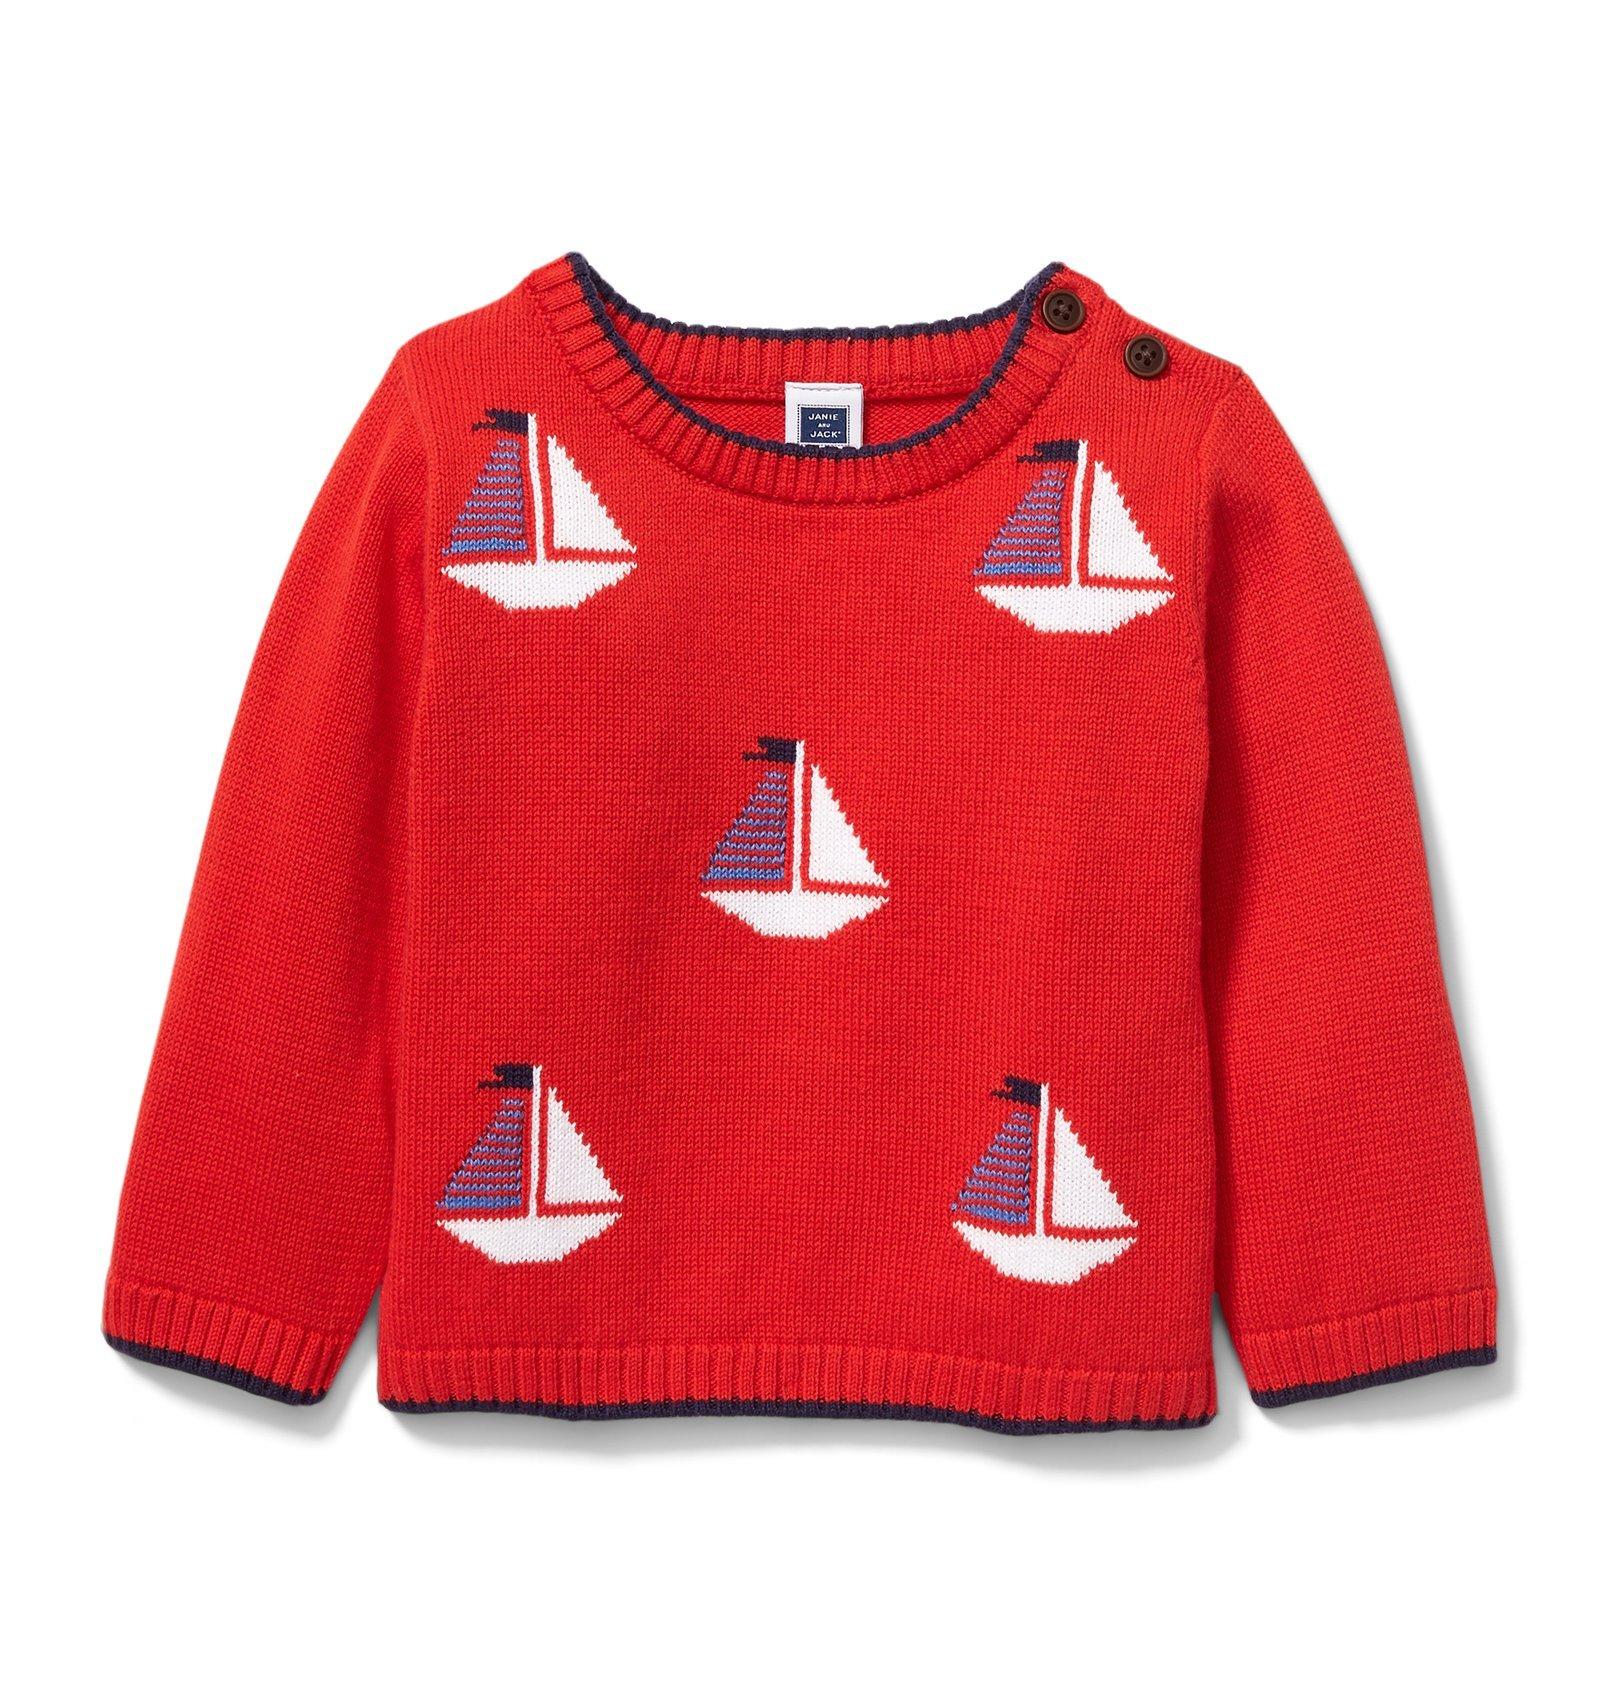 Sailboat Sweater 